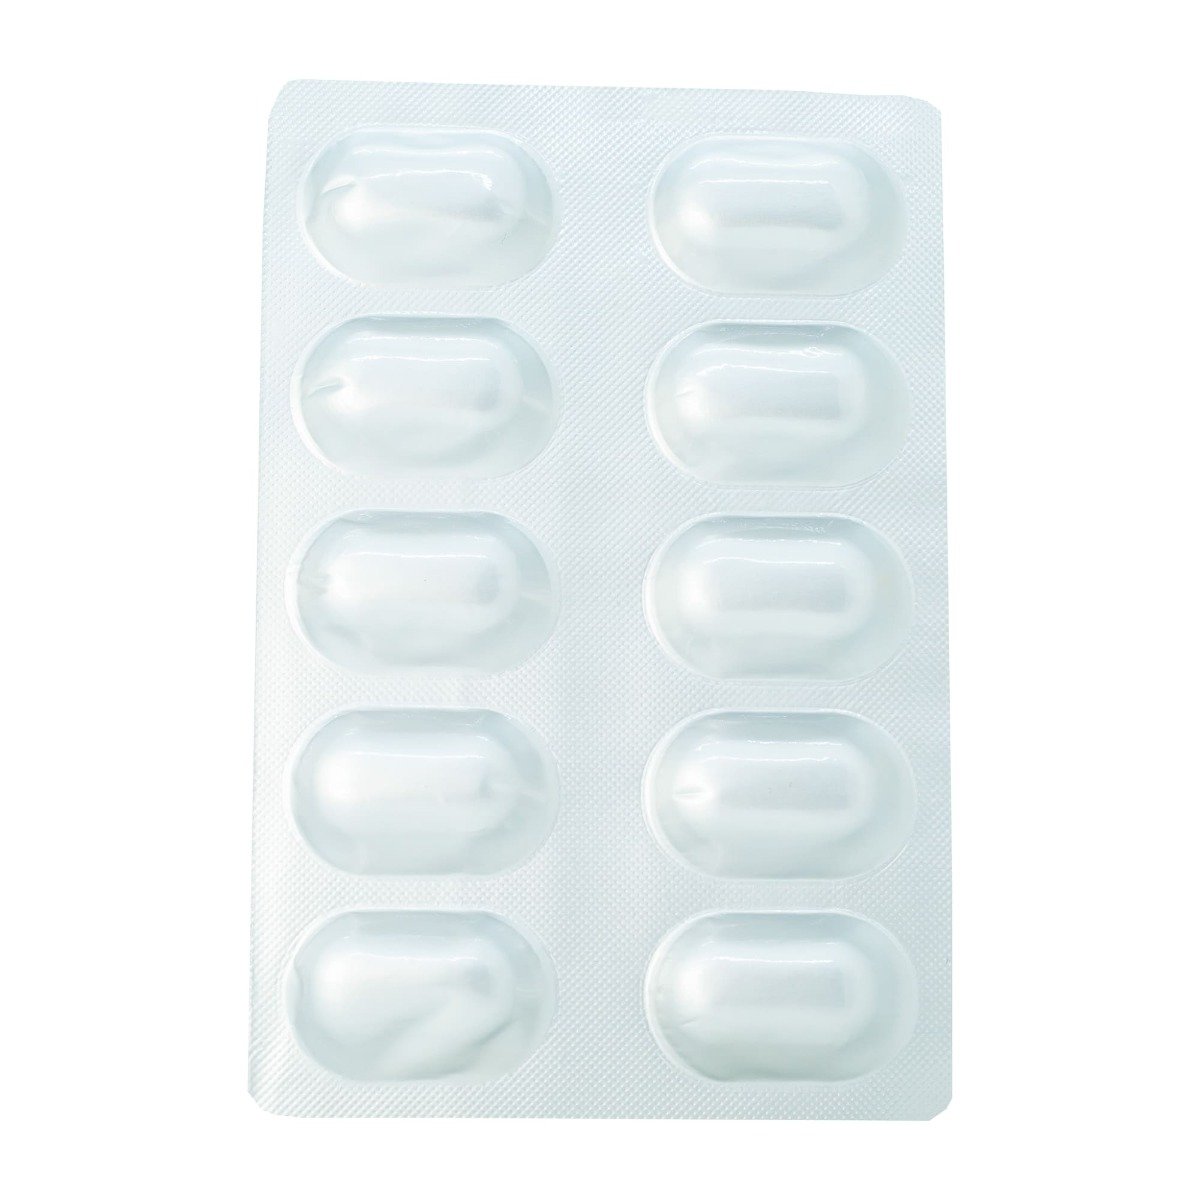 Cymbatex 60 mg - 30 Capsules